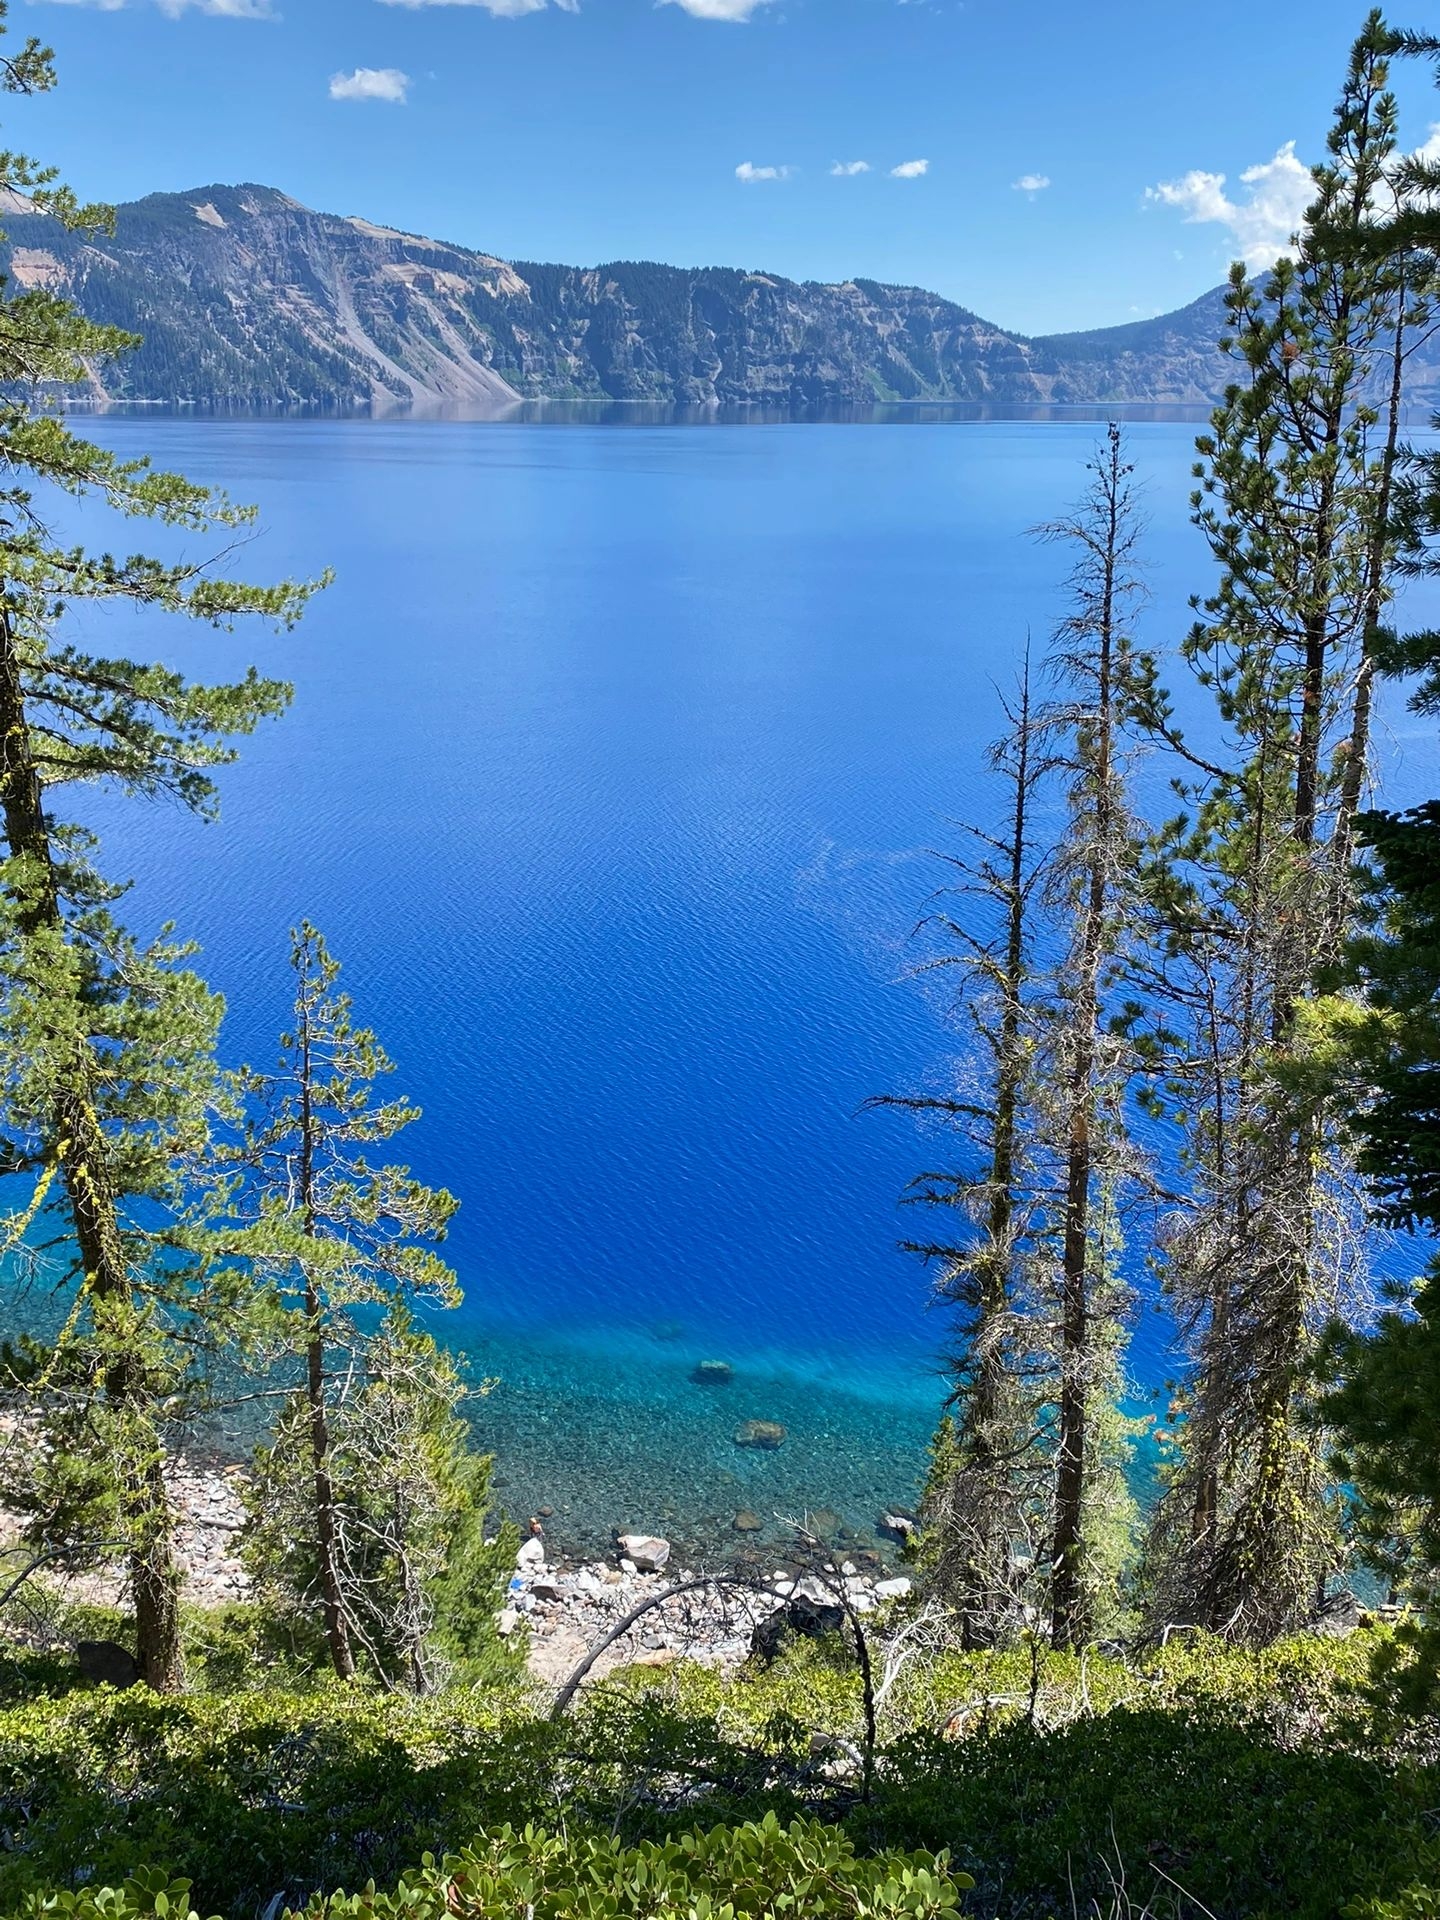 Crater Lake颜色蓝到不真实/火山湖国家公园